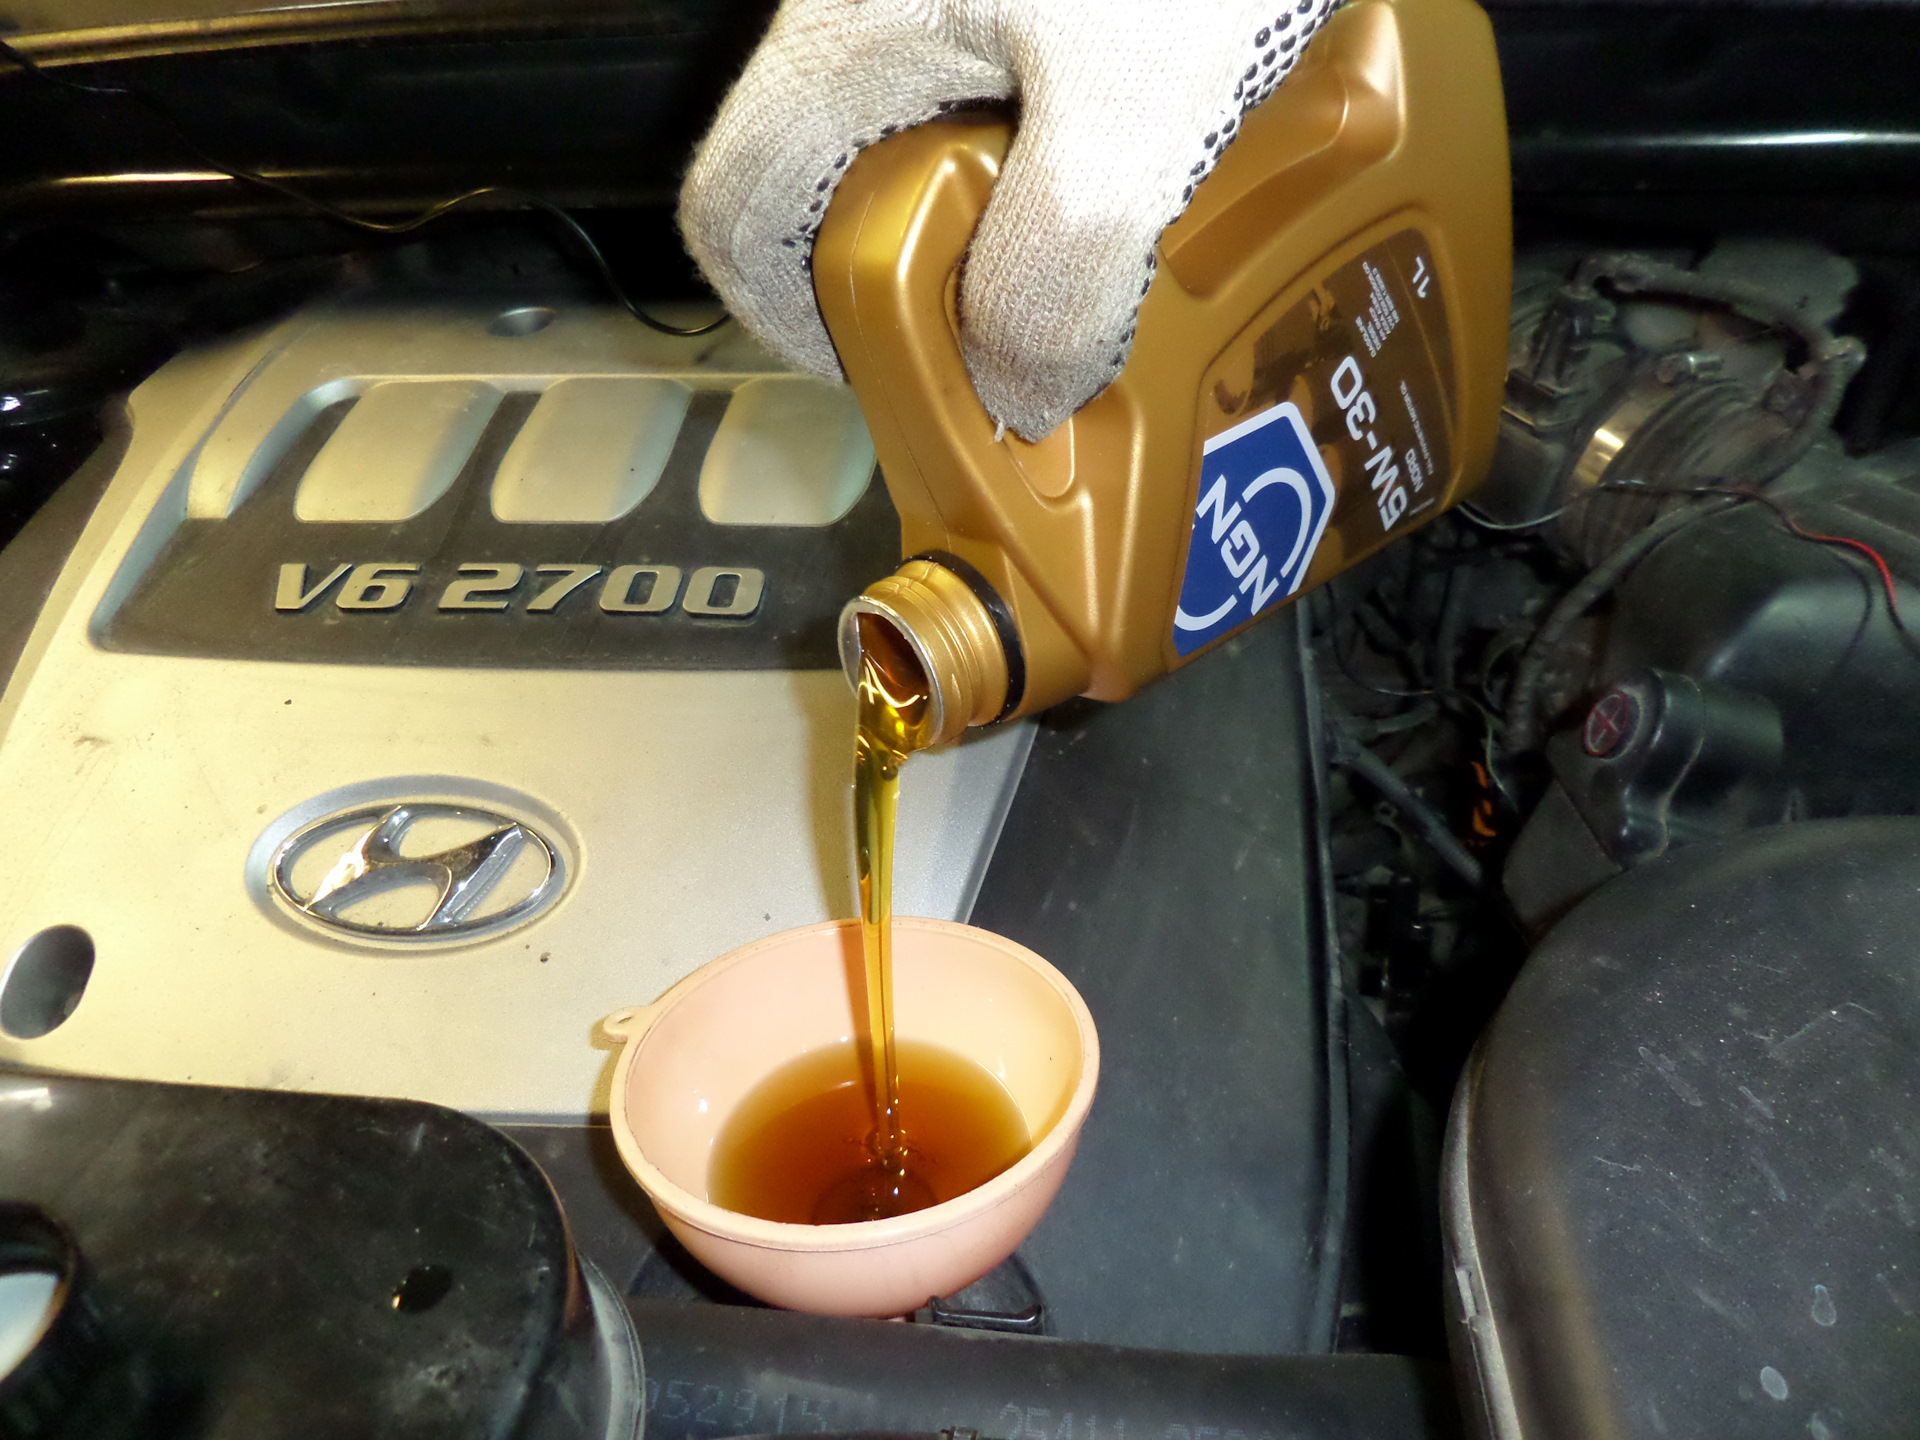 Масло туссан 2018. Туксон масло в двигателе. Лучше моторное масло для Хендай Туссан 2018. Заливка масла Tucson nx4. Какое масло лучше заливать в двигатель Туссан 2л 2018 г 5в40.